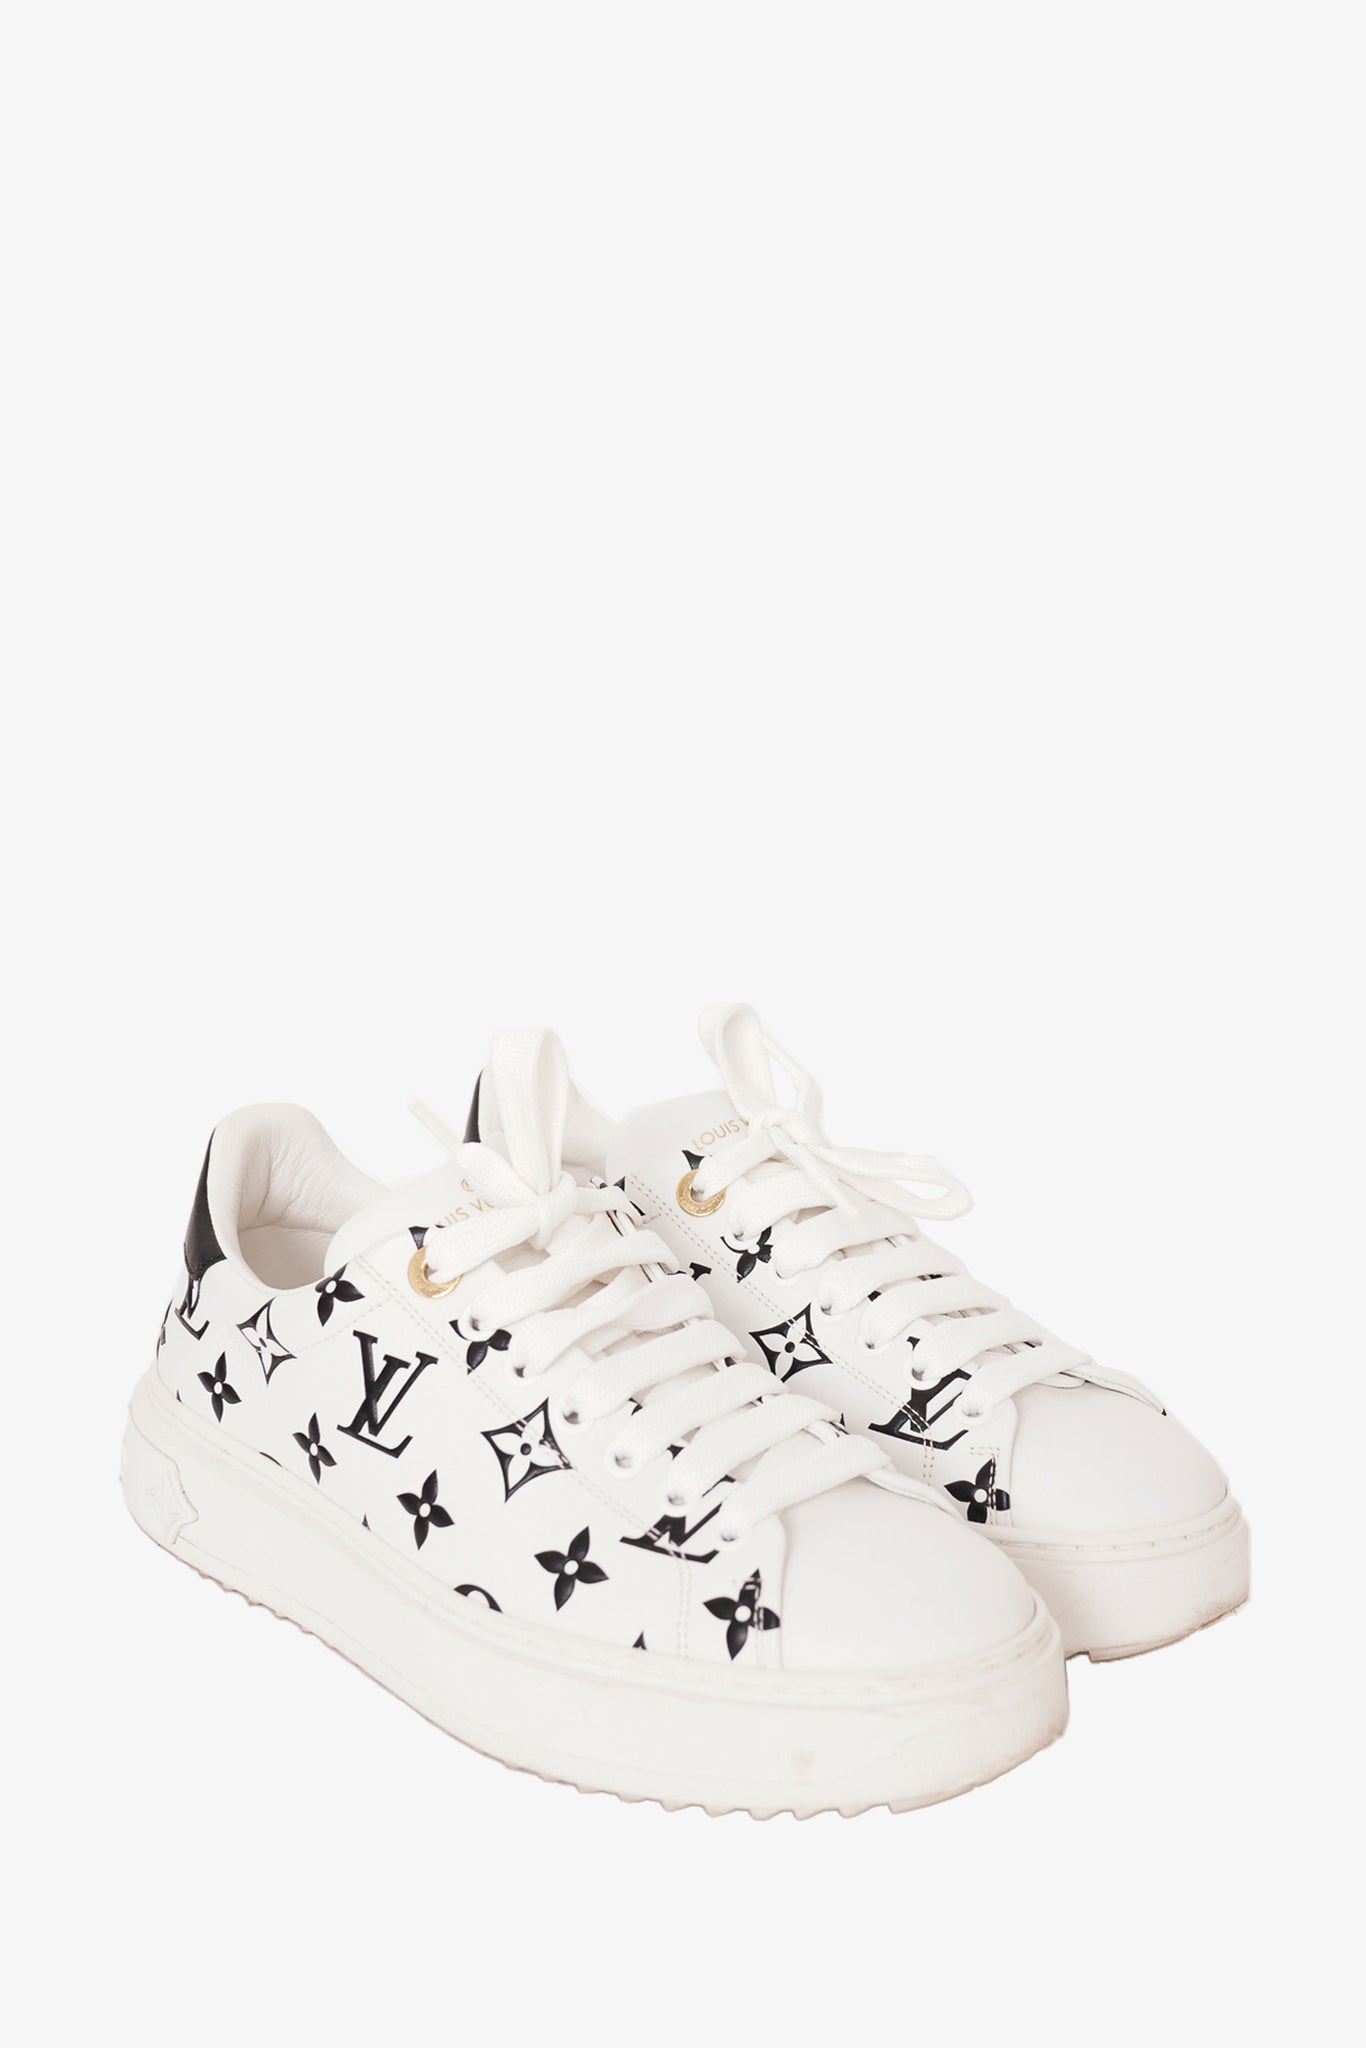 Louis Vuitton, Shoes, Louis Vuitton Monogram Time Out Sneakers Size 55